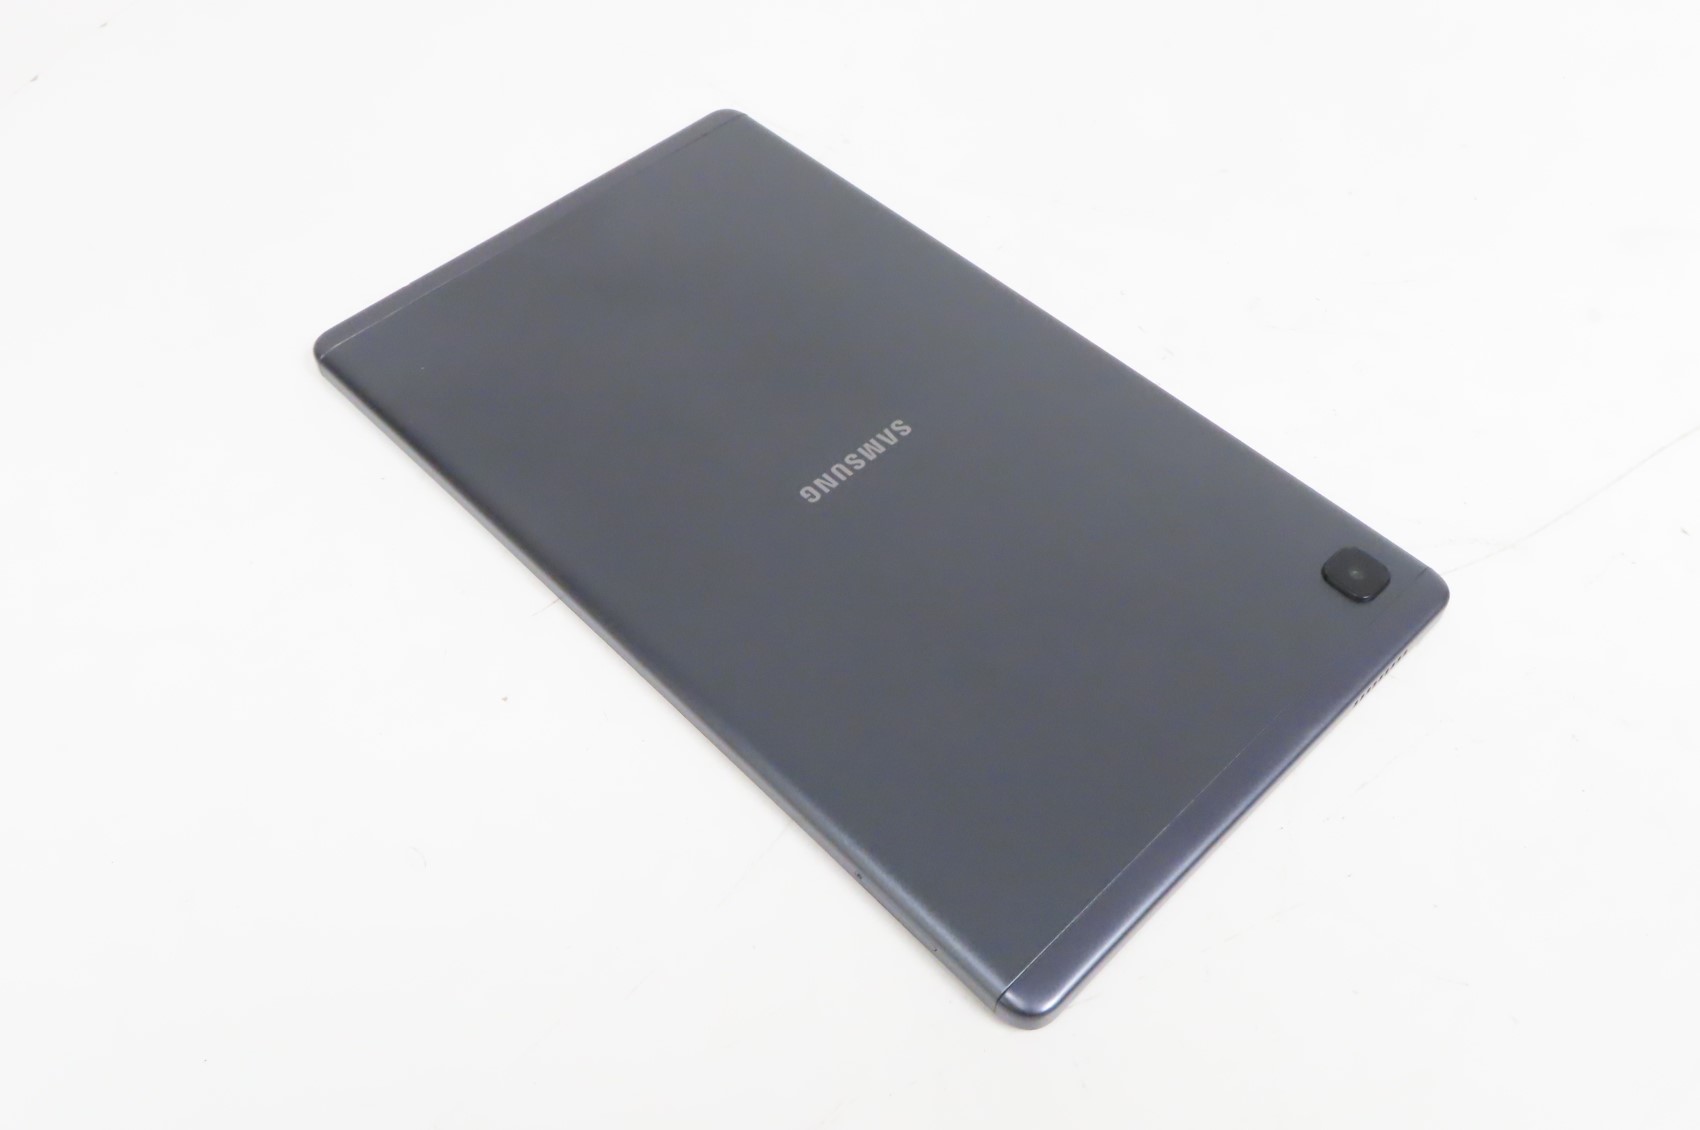 Galaxy Tab A7 Lite 8.7, 32GB, Silver (WiFi) Tablets - SM